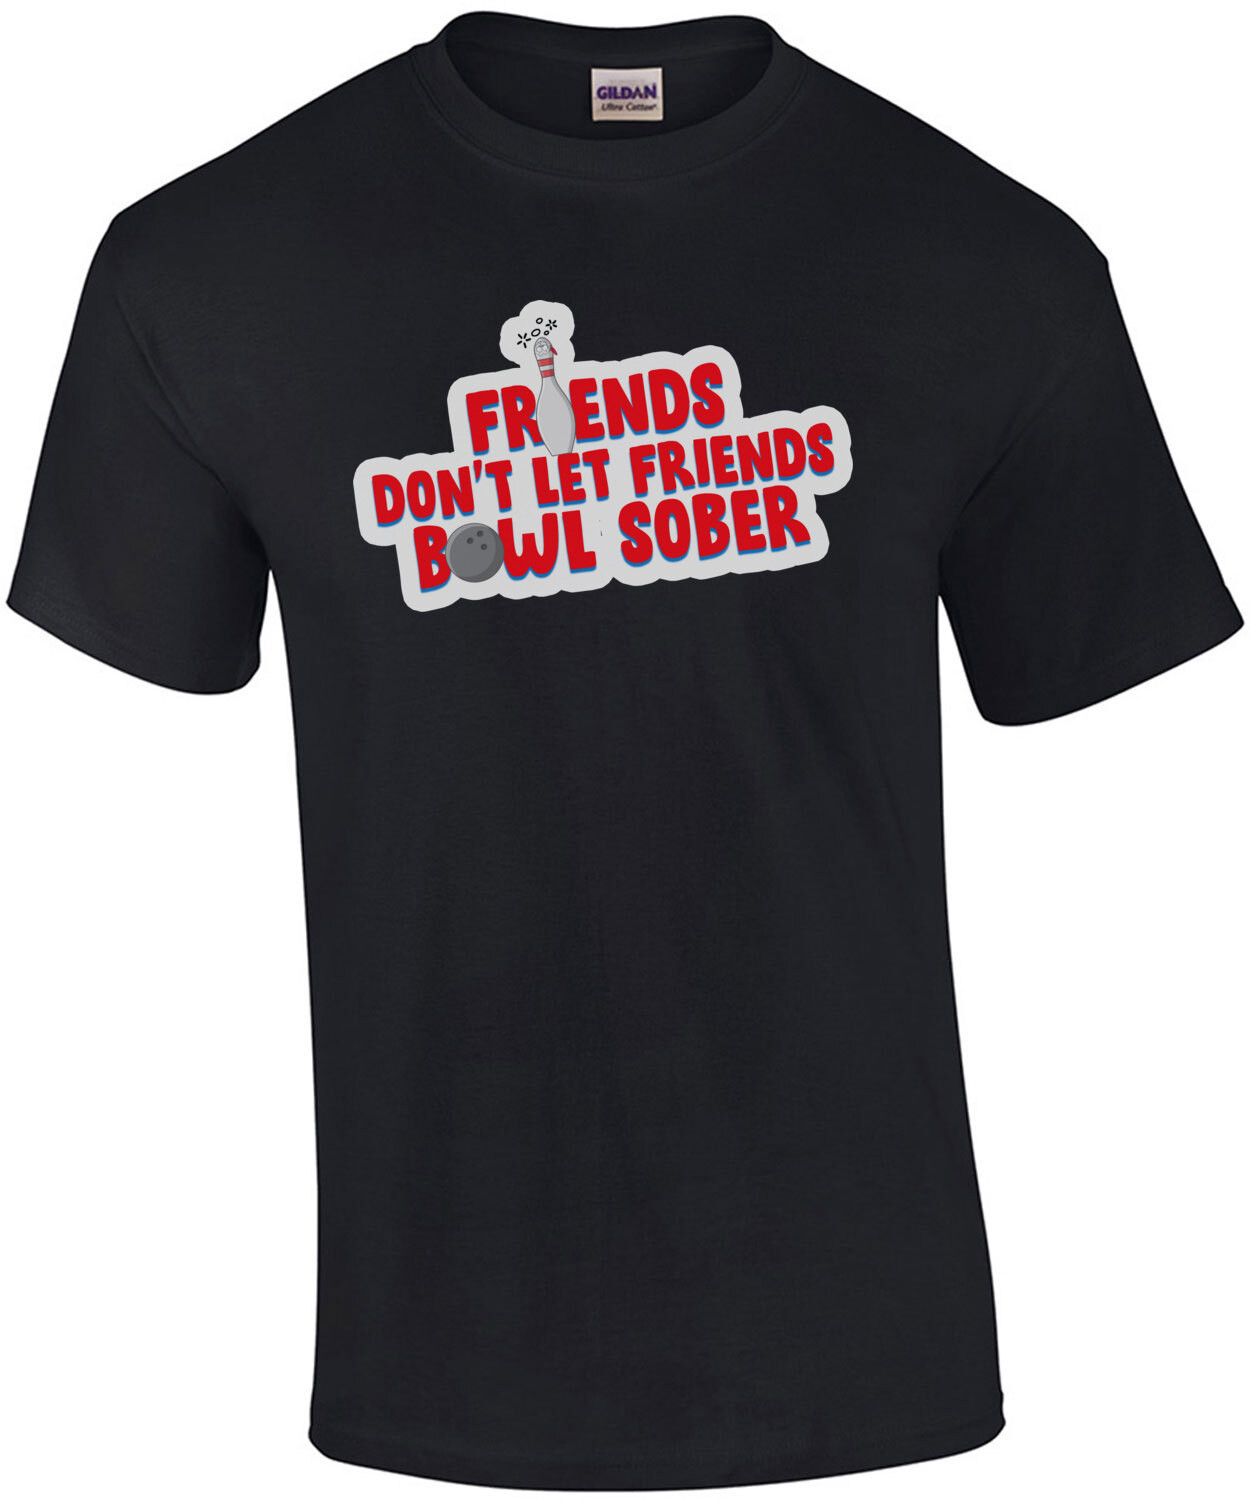 Friends don't let friends bowl sober - funny bowling t-shirt